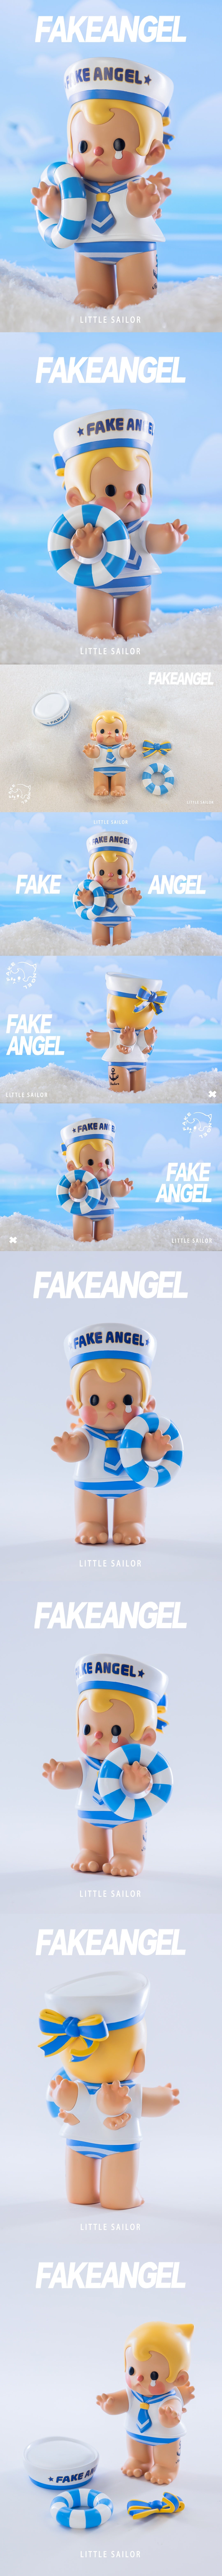 Moe Double Fake Angel Little Sailor Collectible Figurine